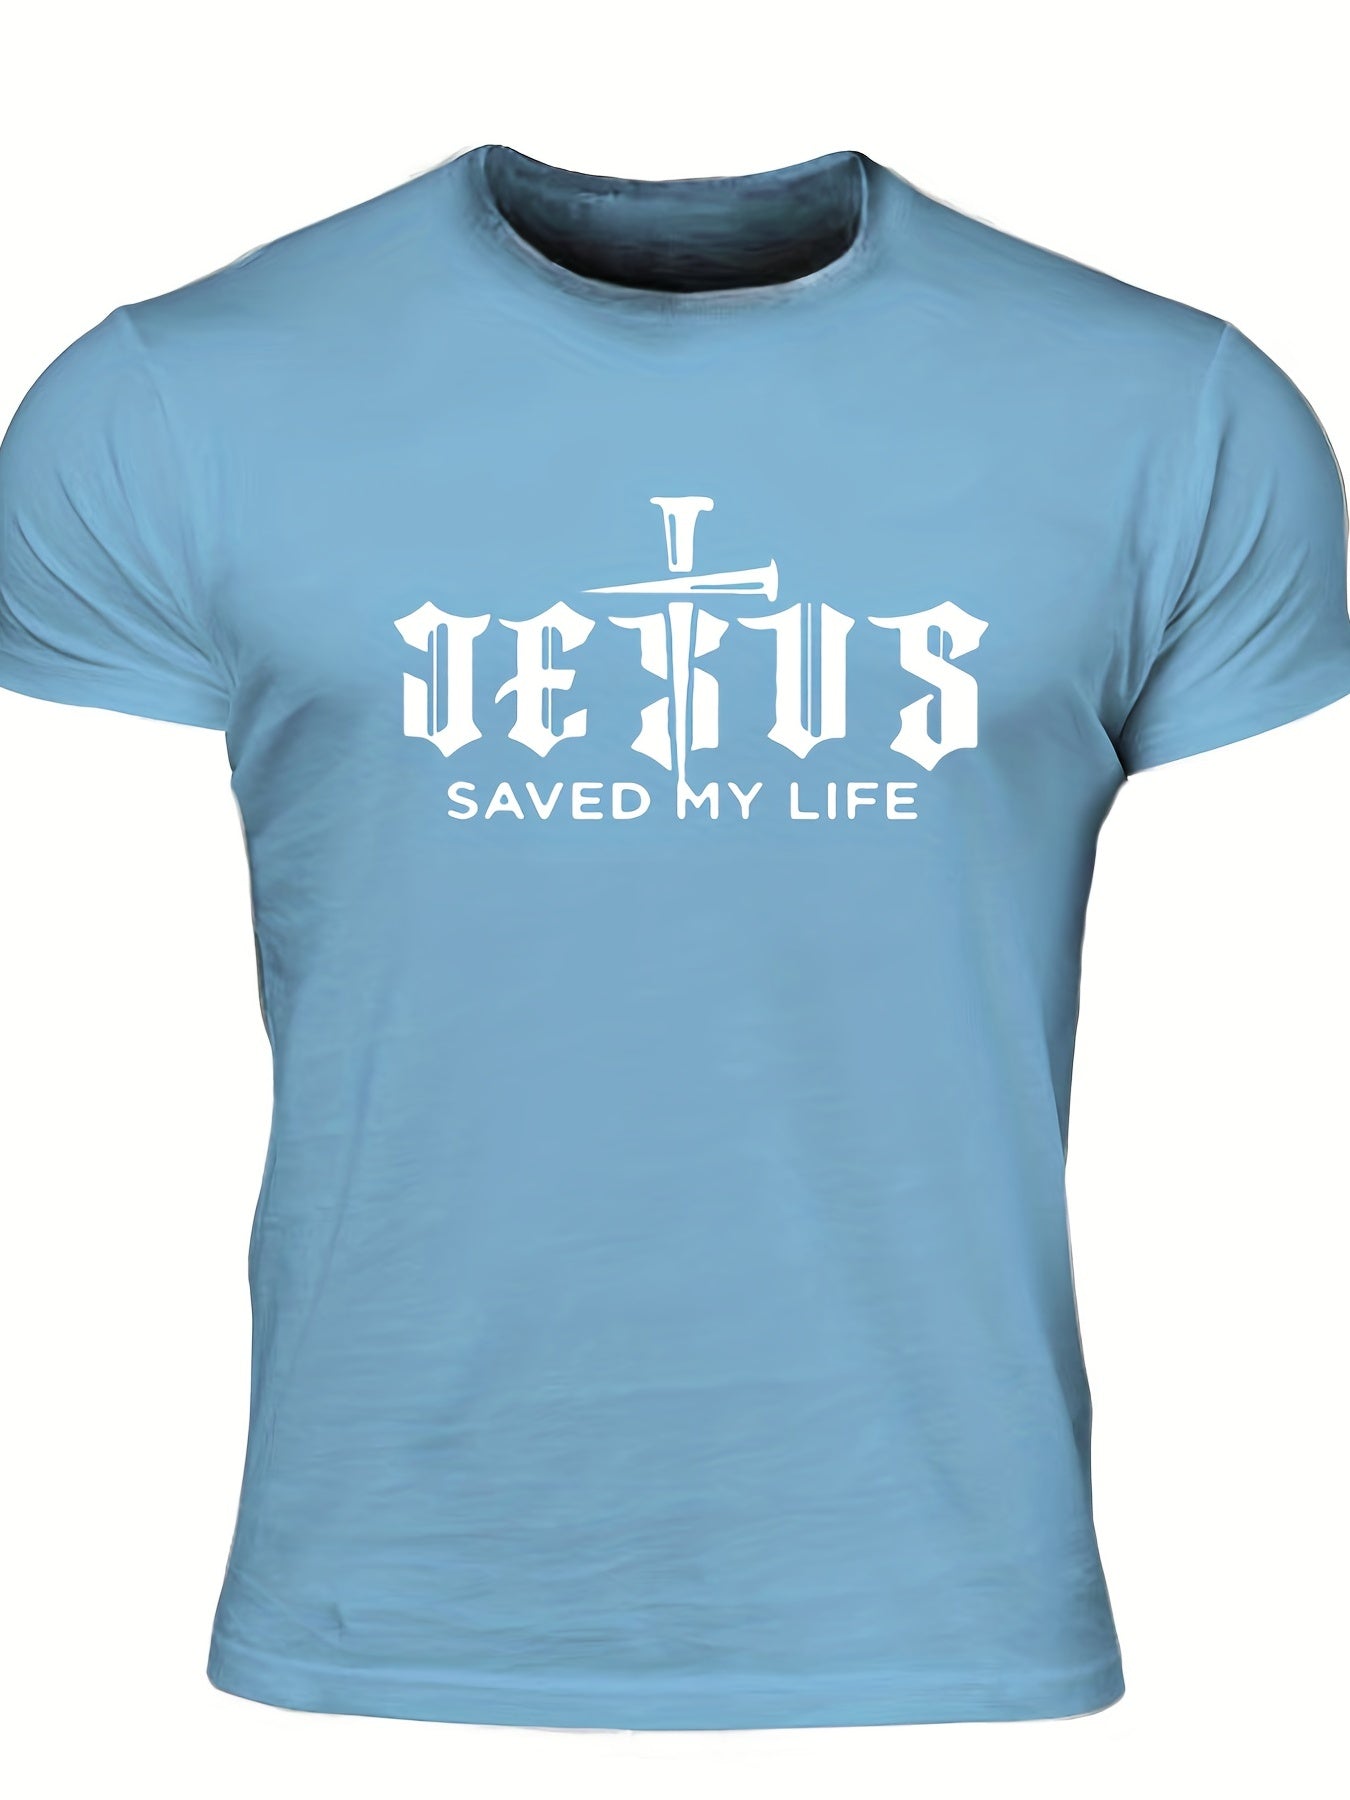 Jesus Saved My Life Men's Christian T-shirt claimedbygoddesigns